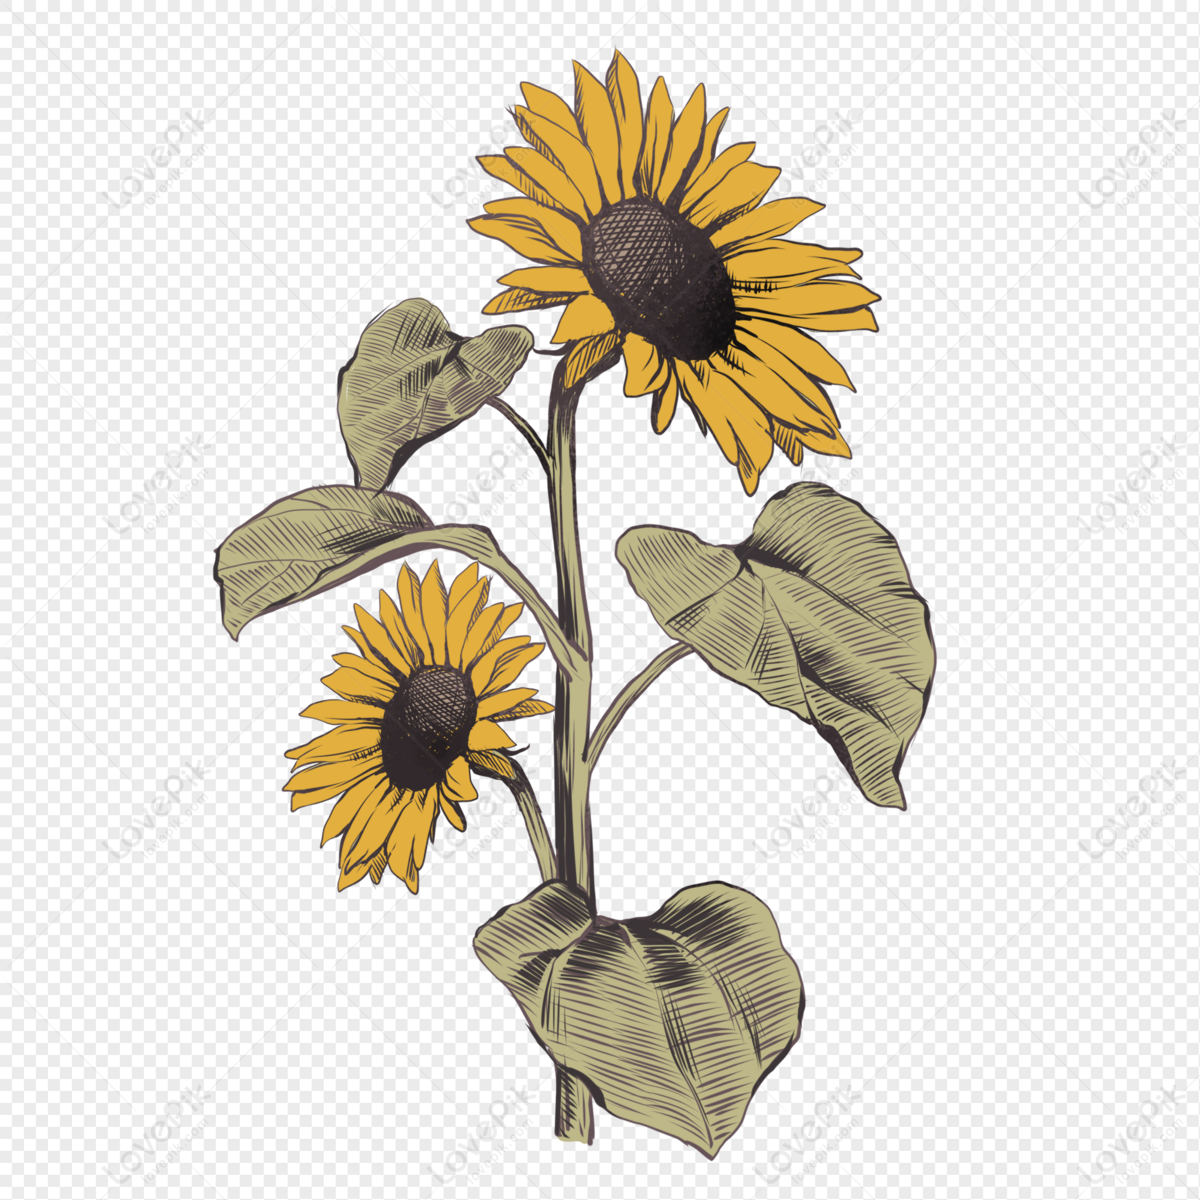 Sunflower drawing, painting Original art, Flower DRAWING | eBay